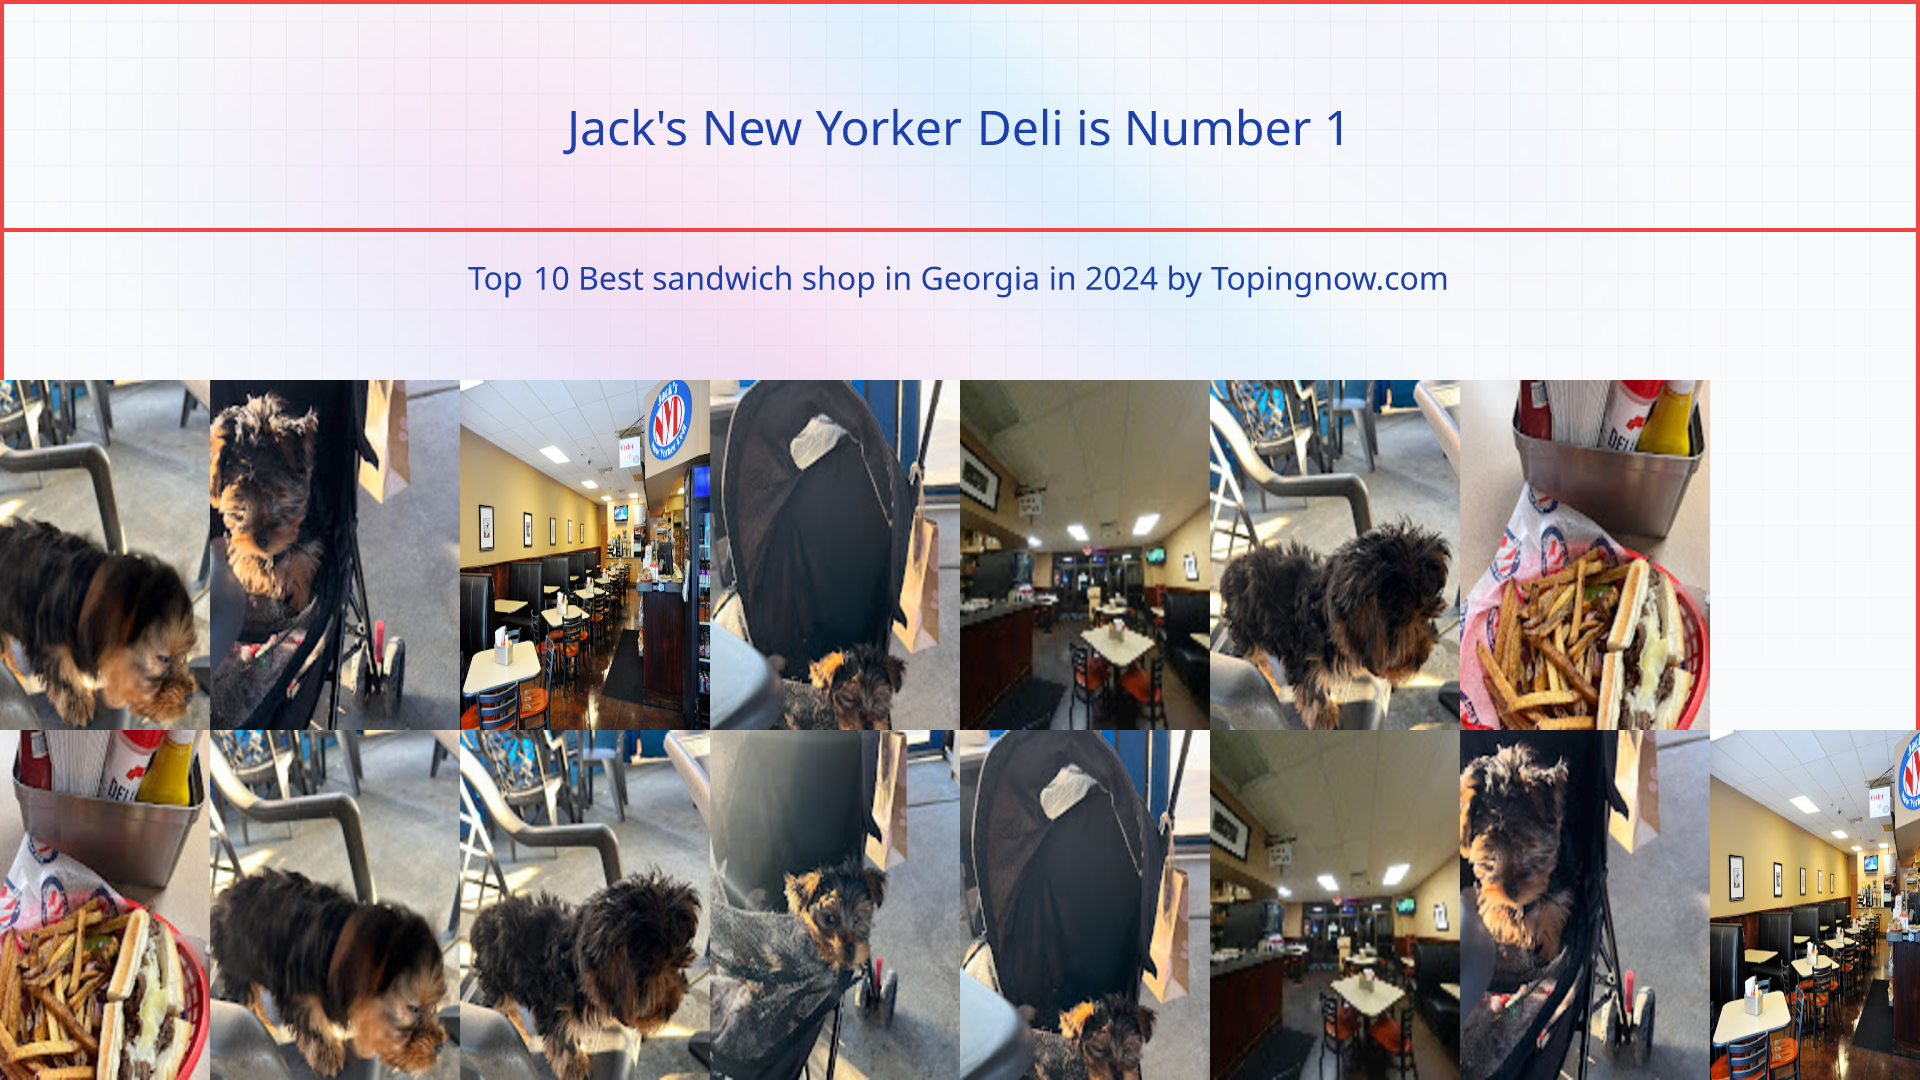 Jack's New Yorker Deli: Top 100 Best sandwich shop in Georgia in 2024